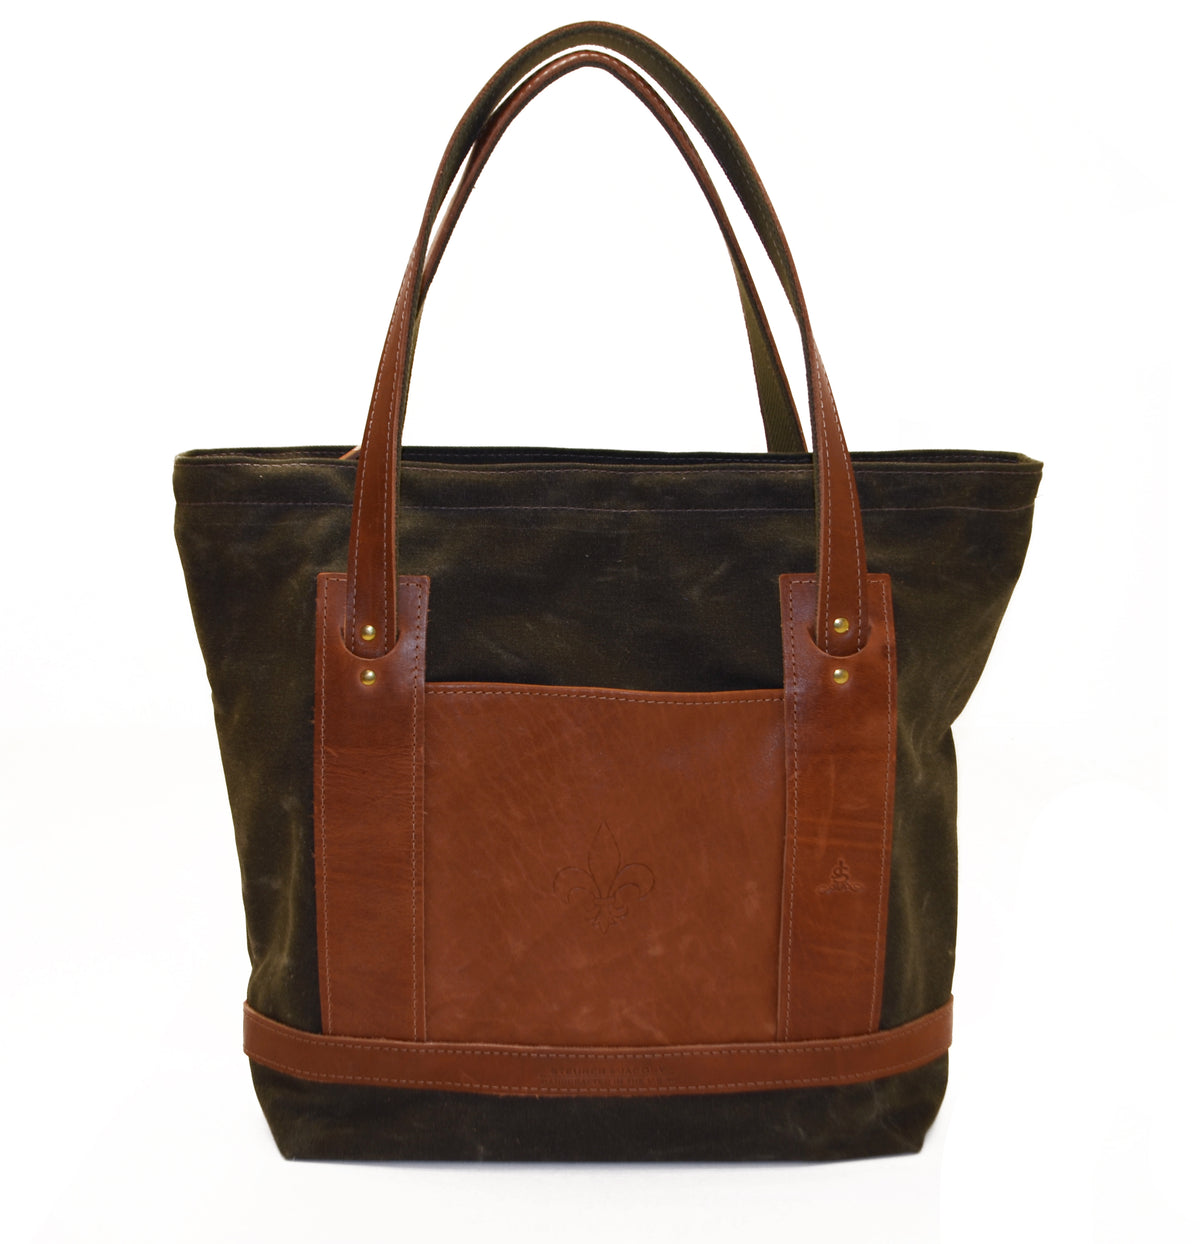 Market Bag - Olive Wax with Chestnut Leather Trim and Pocket - Steurer & Jacoby